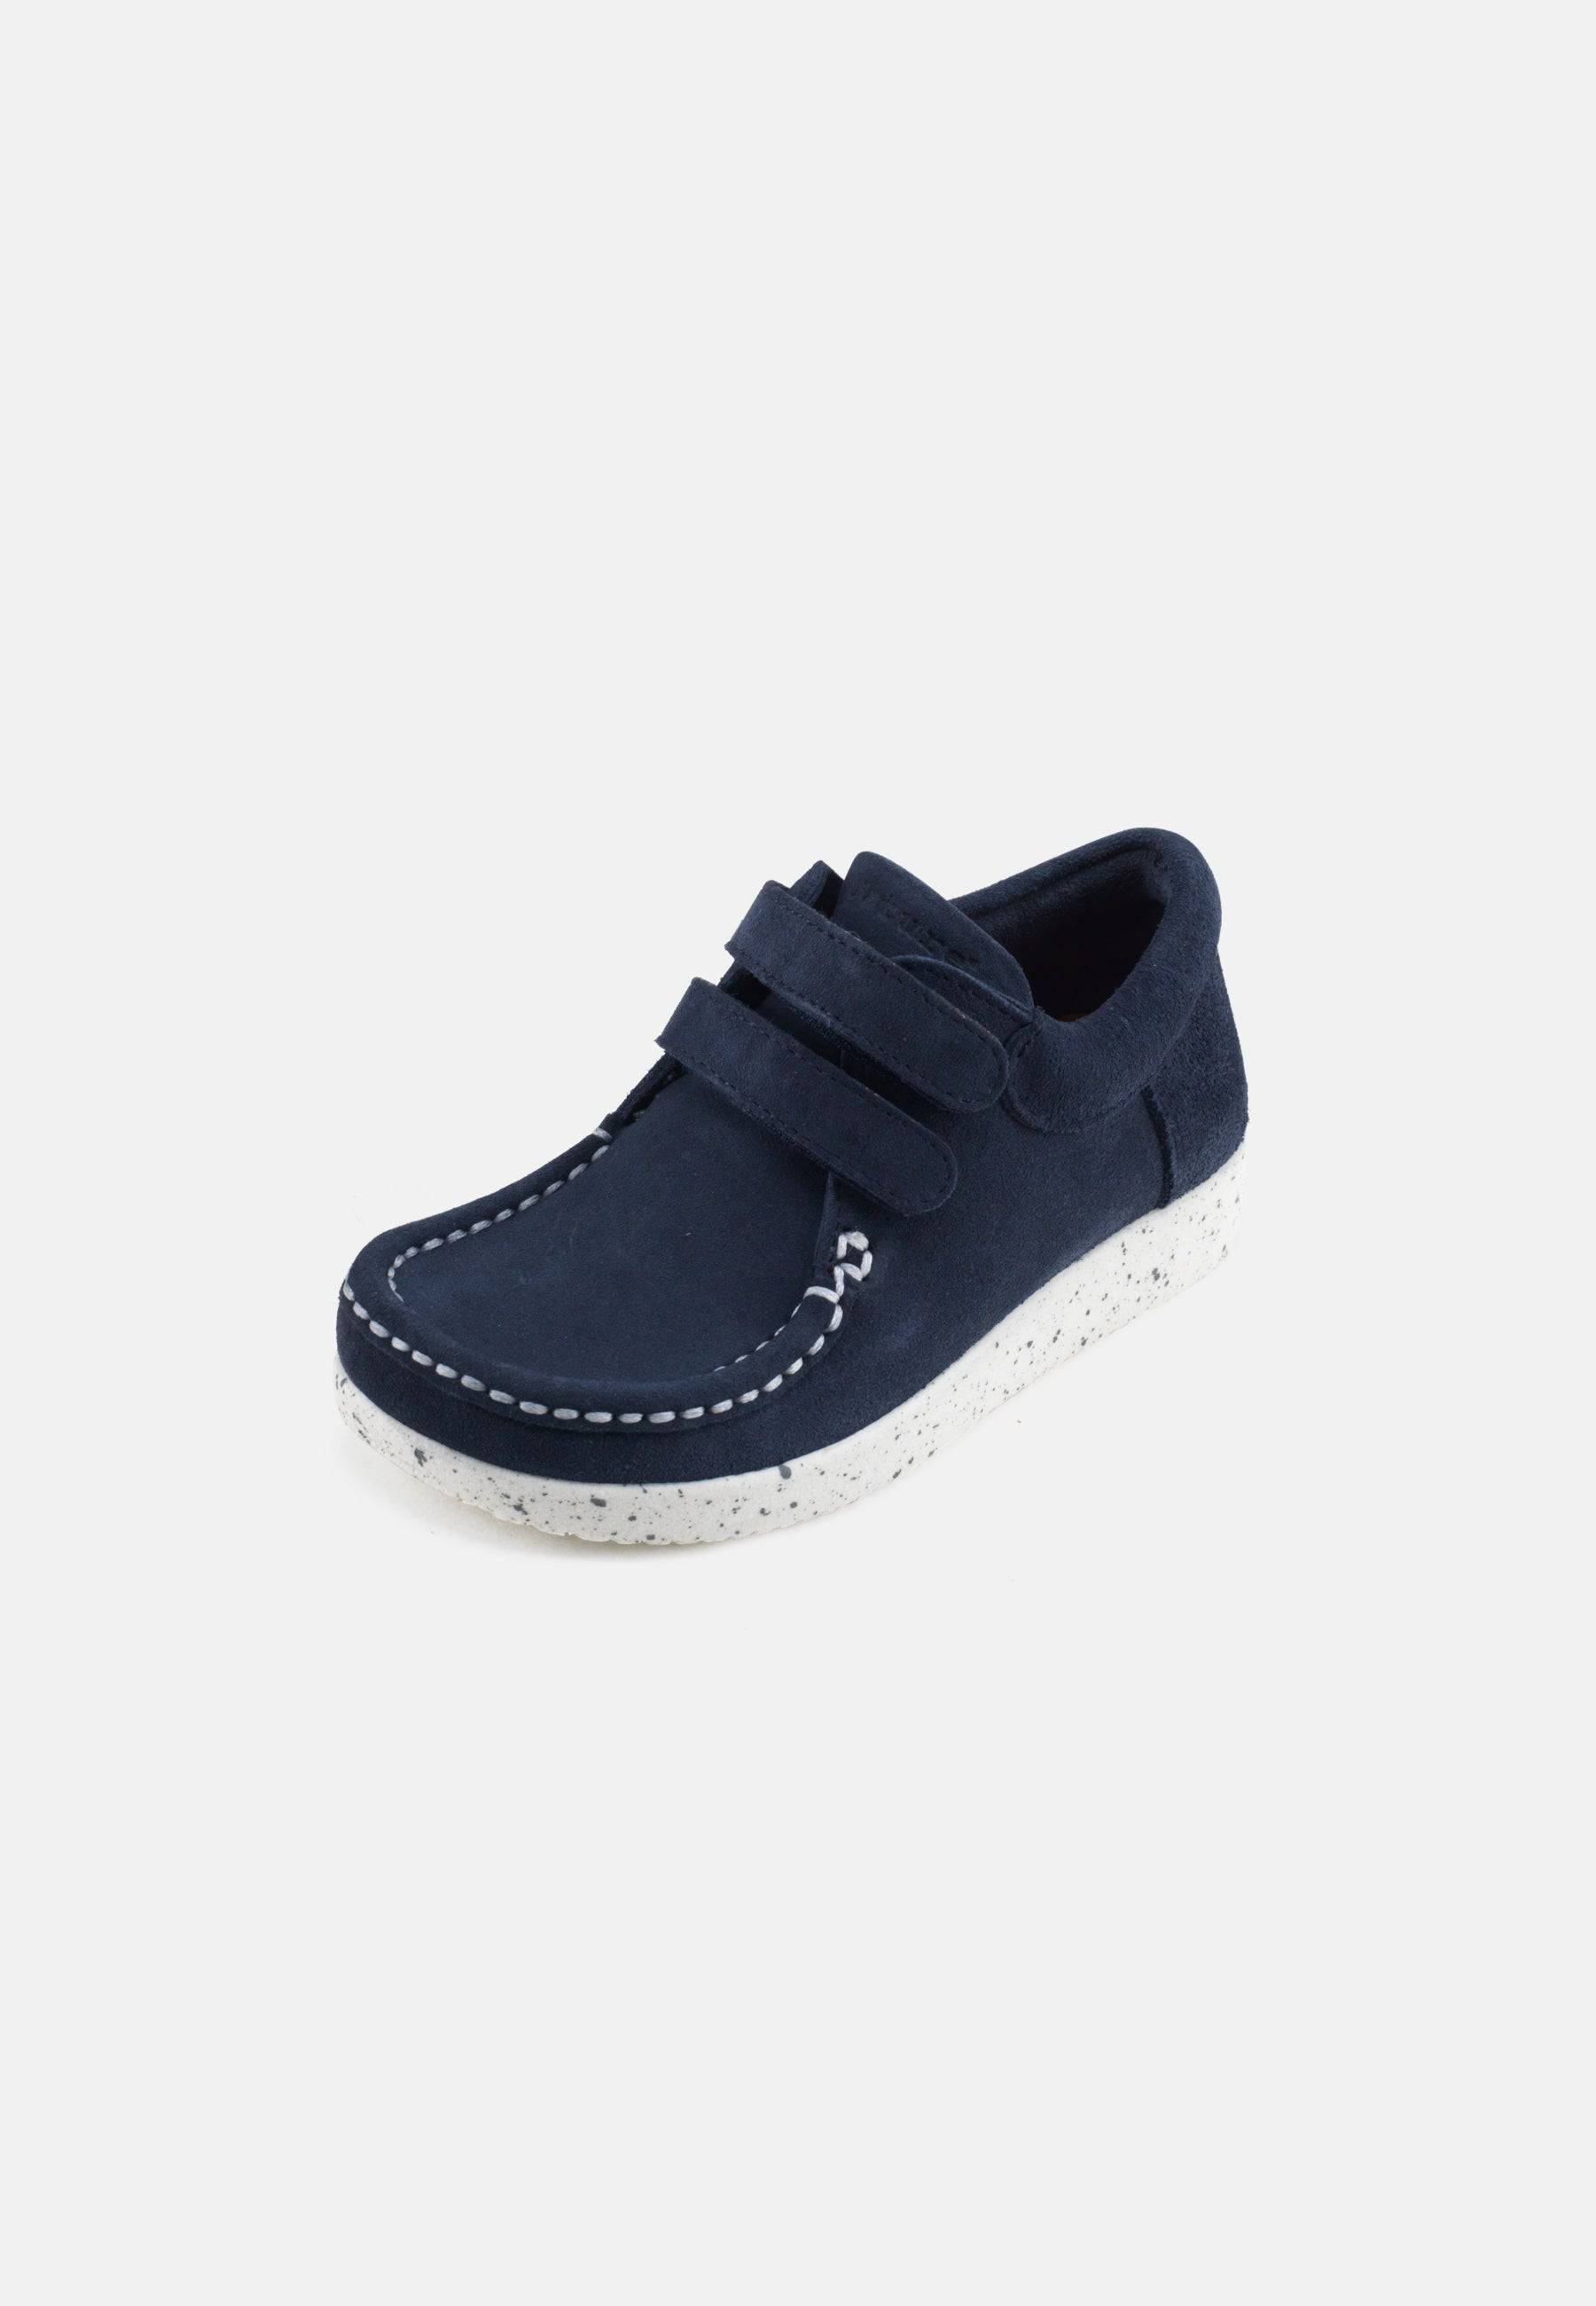 Ash Children's Shoes Suede - Navy